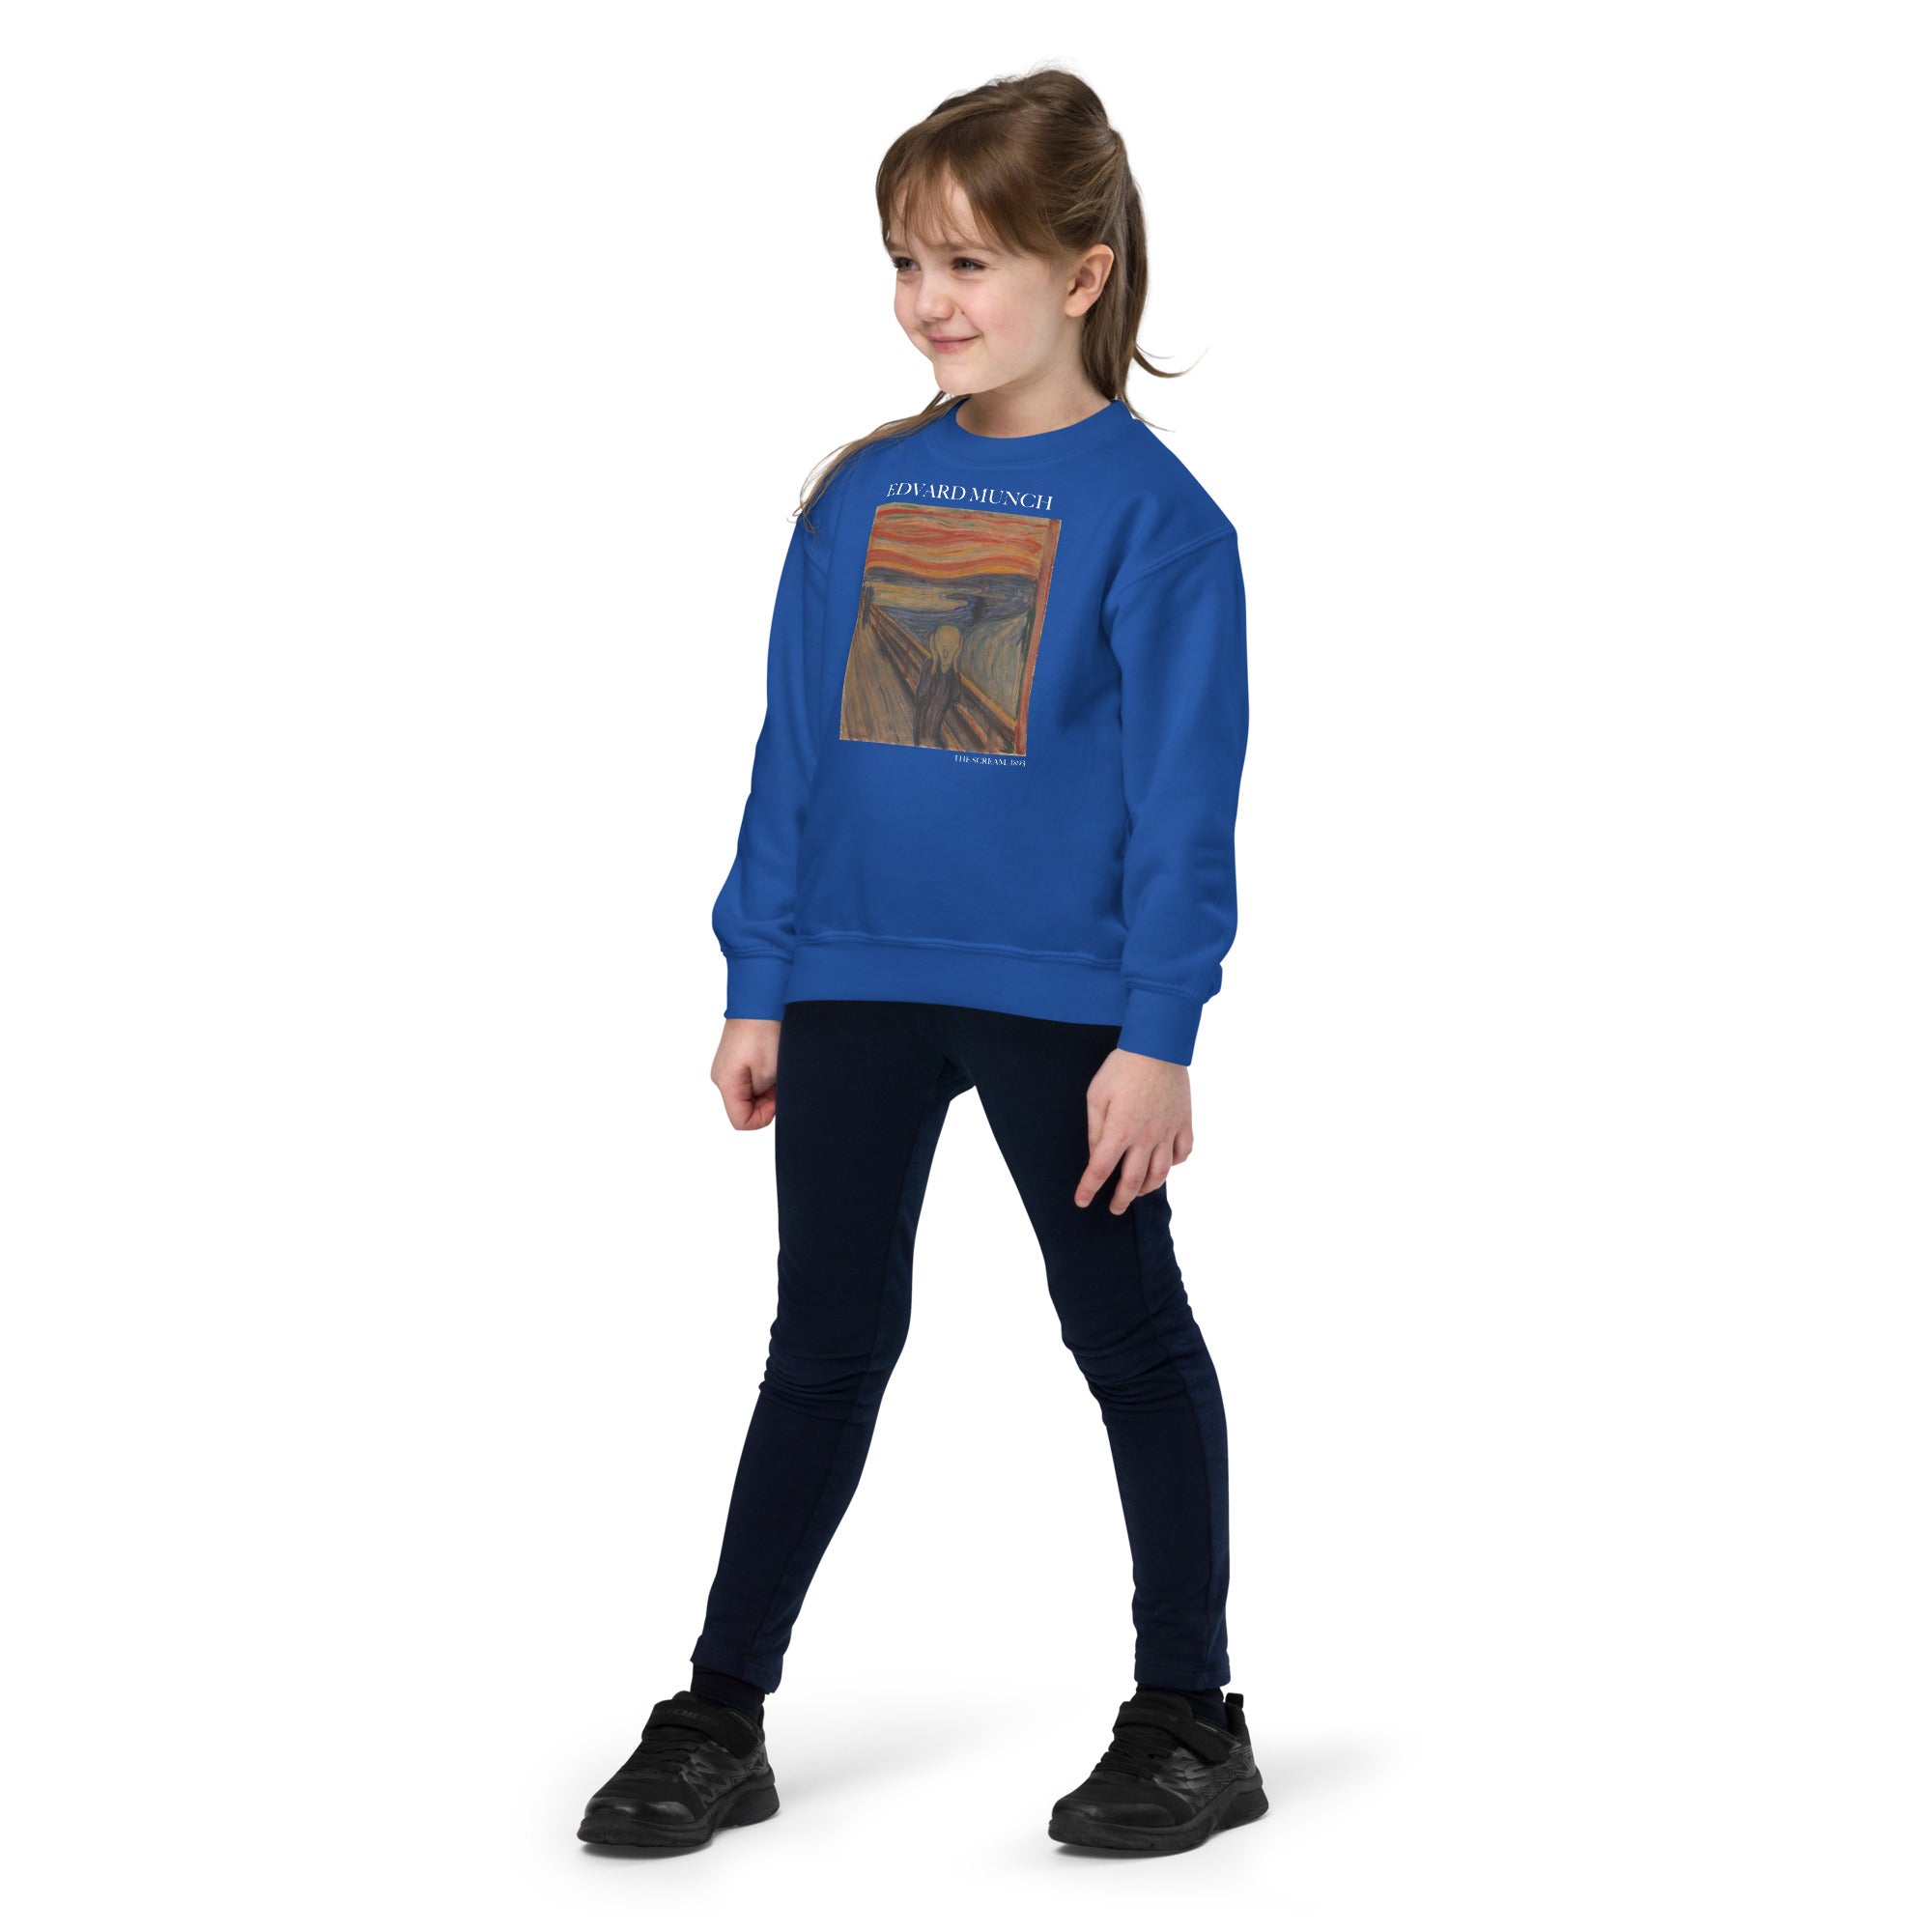 Edvard Munch 'The Scream' Famous Painting Crewneck Sweatshirt | Premium Youth Art Sweatshirt